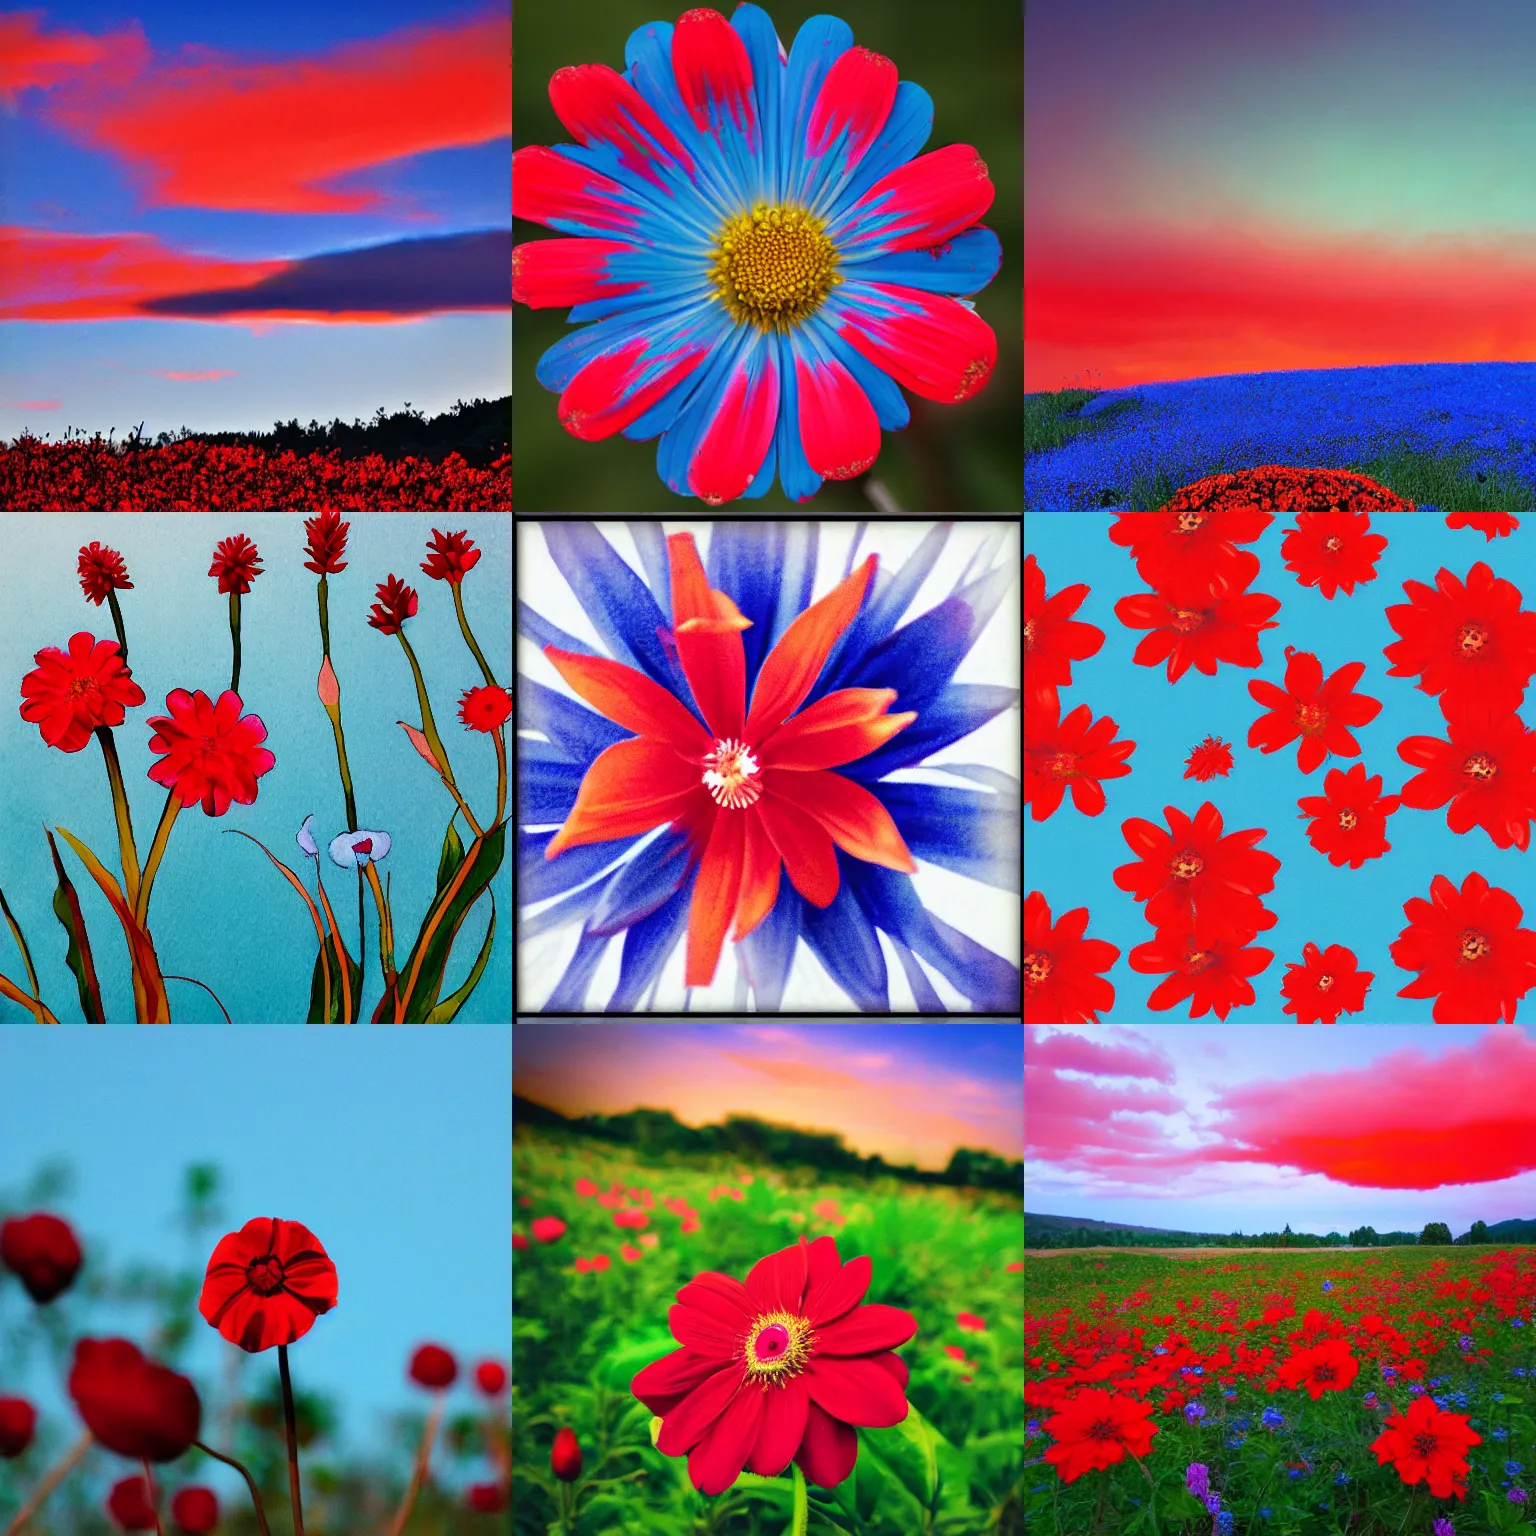 Prompt: red sky blue flower